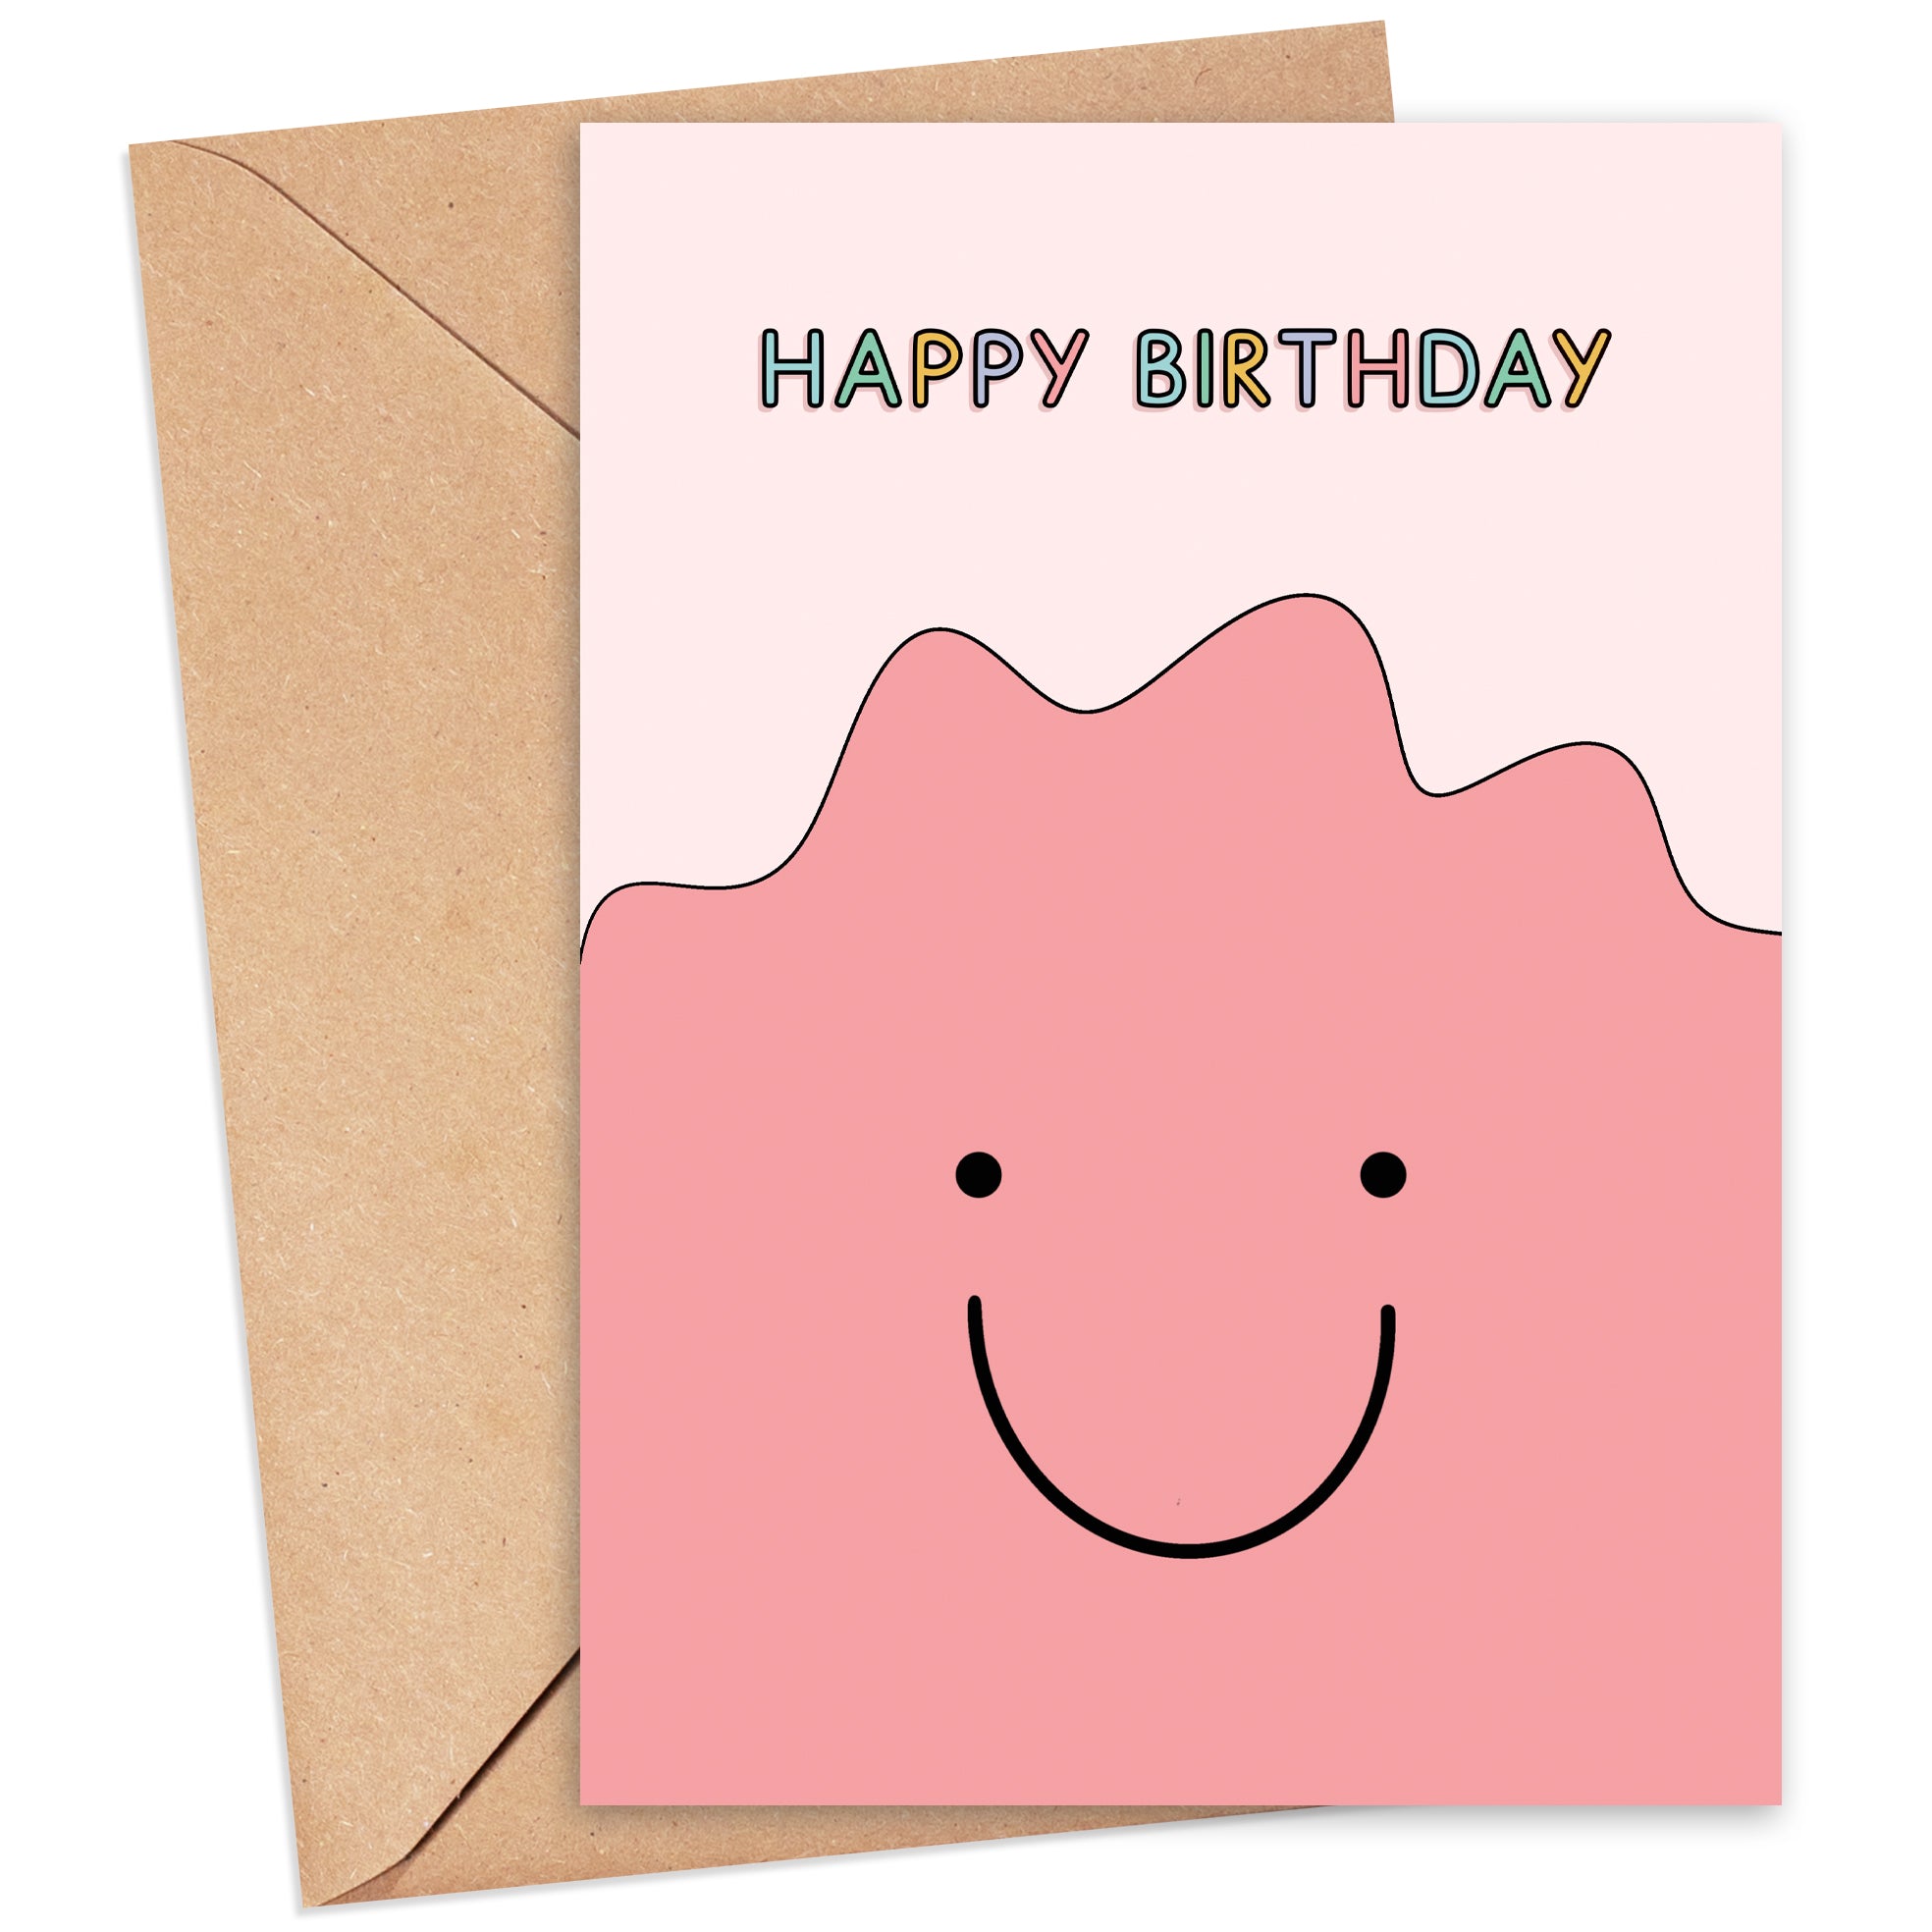 Happy Birthday Pink Monster Card